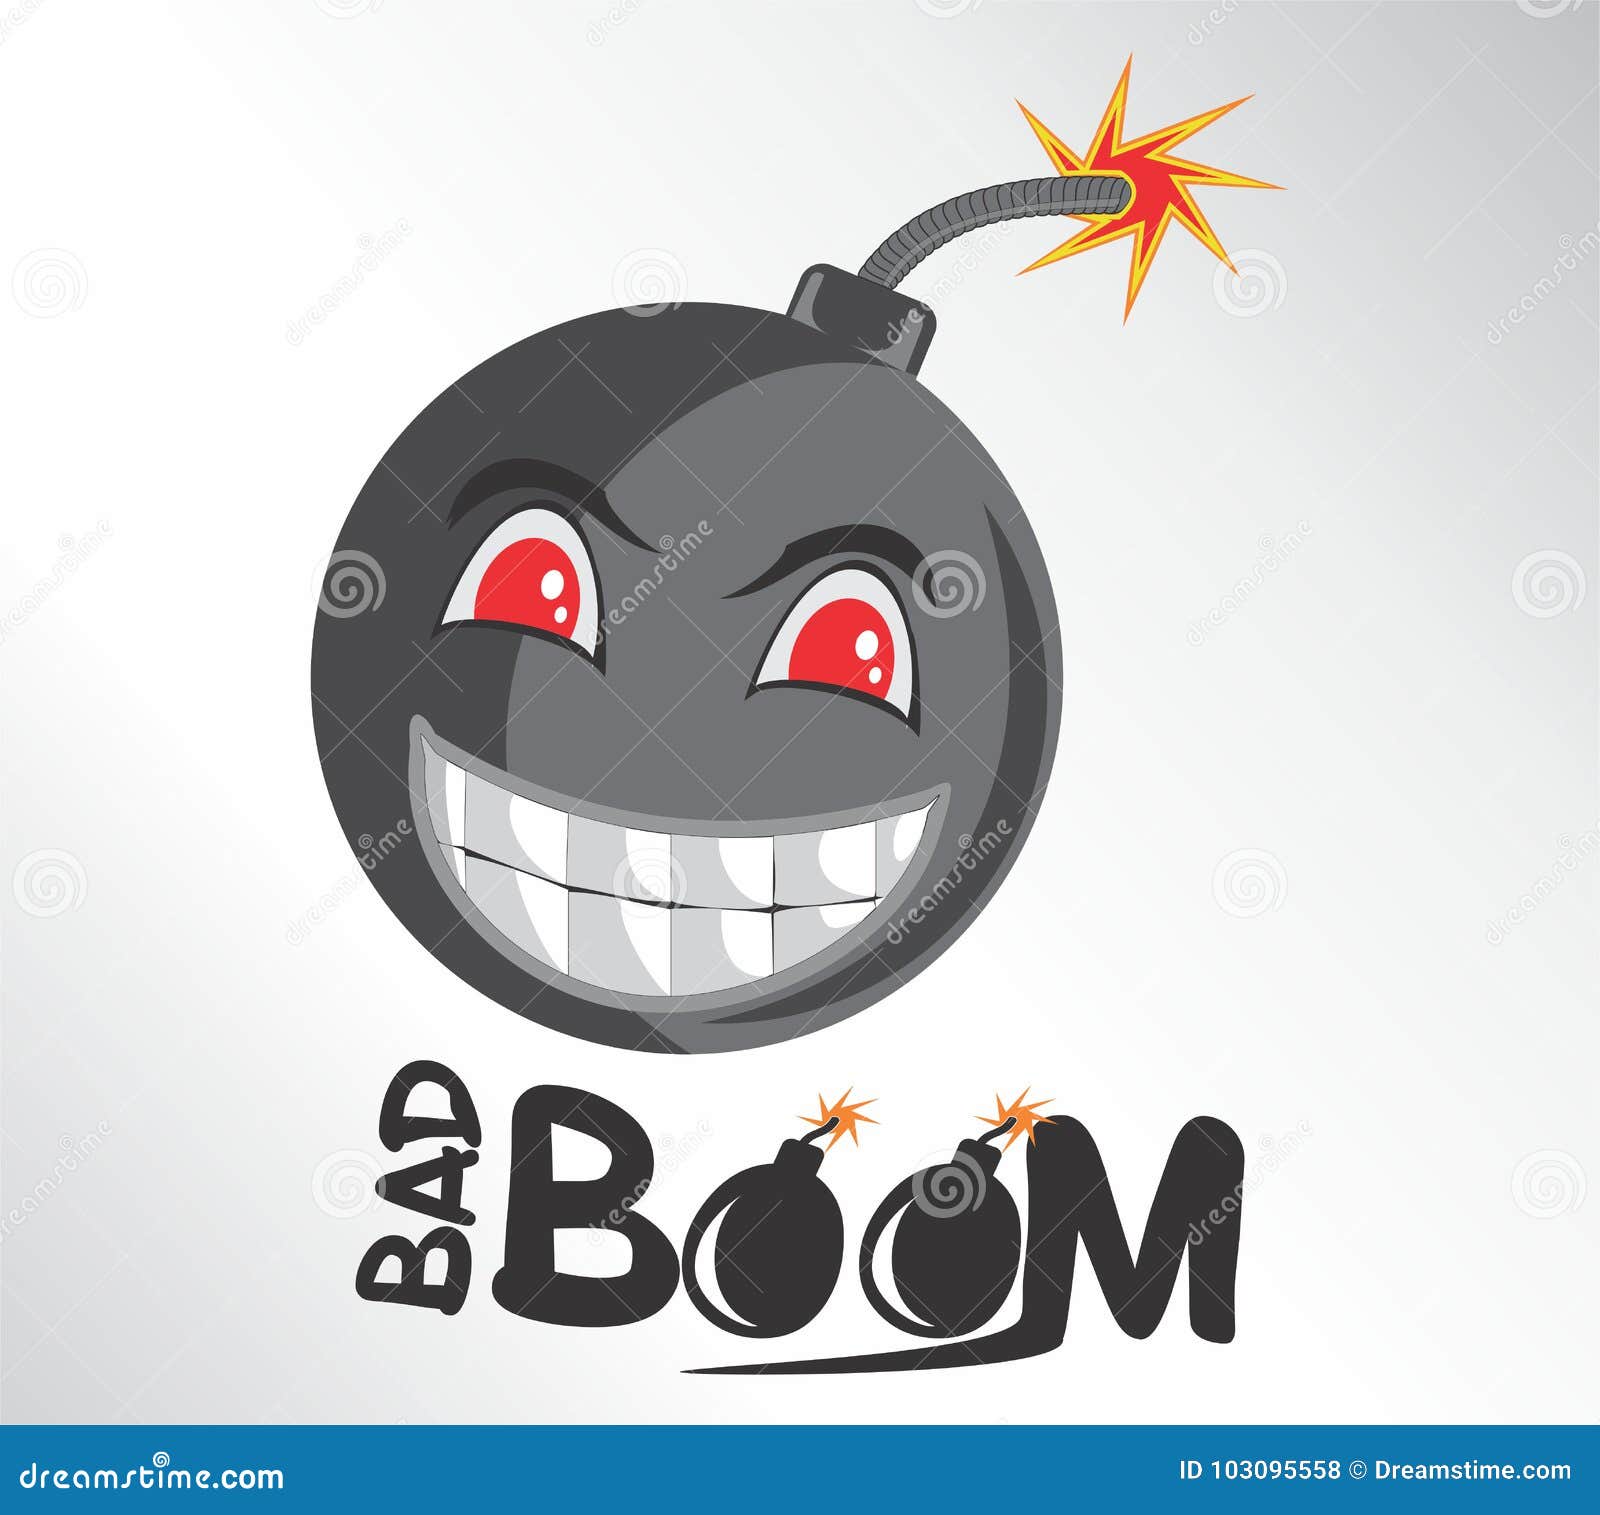 Boom Bad Face Cartoon stock vector. Illustration of element - 103095558